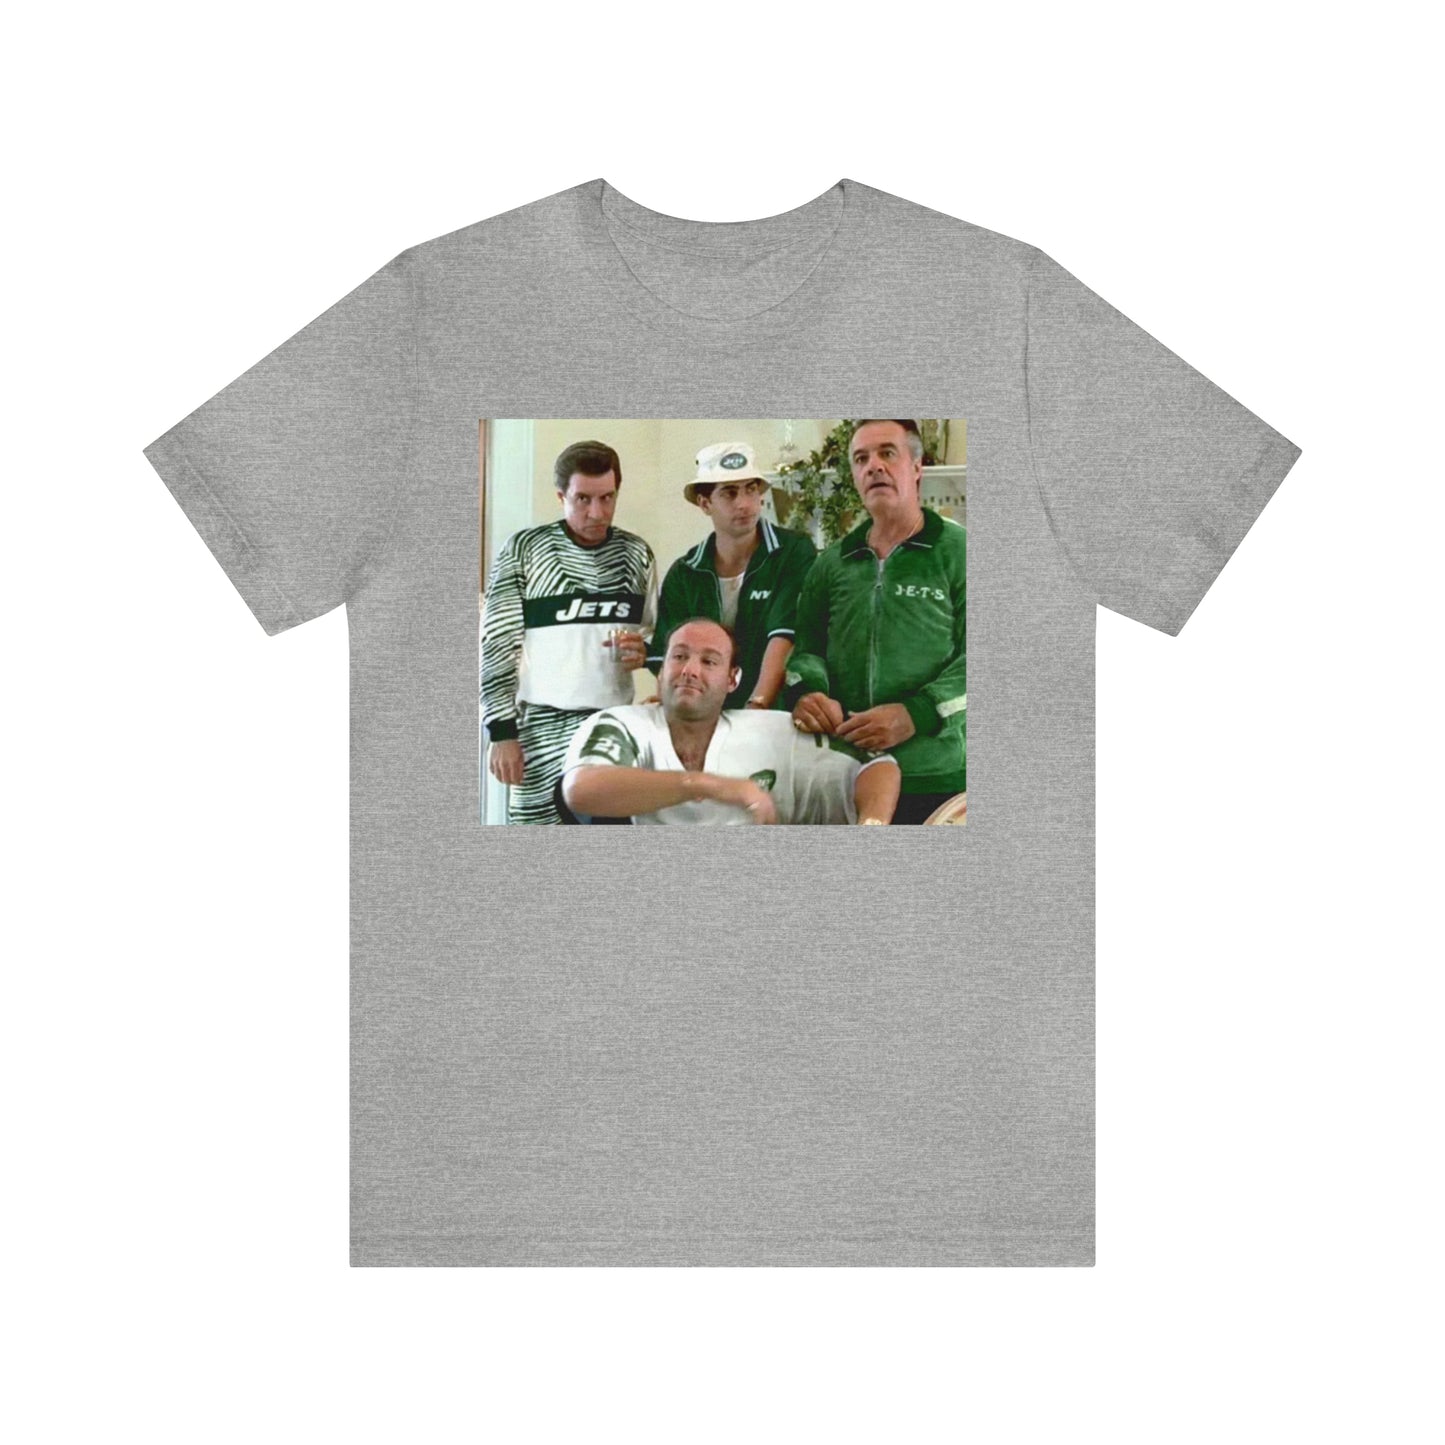 Sopranos Jets Shirt